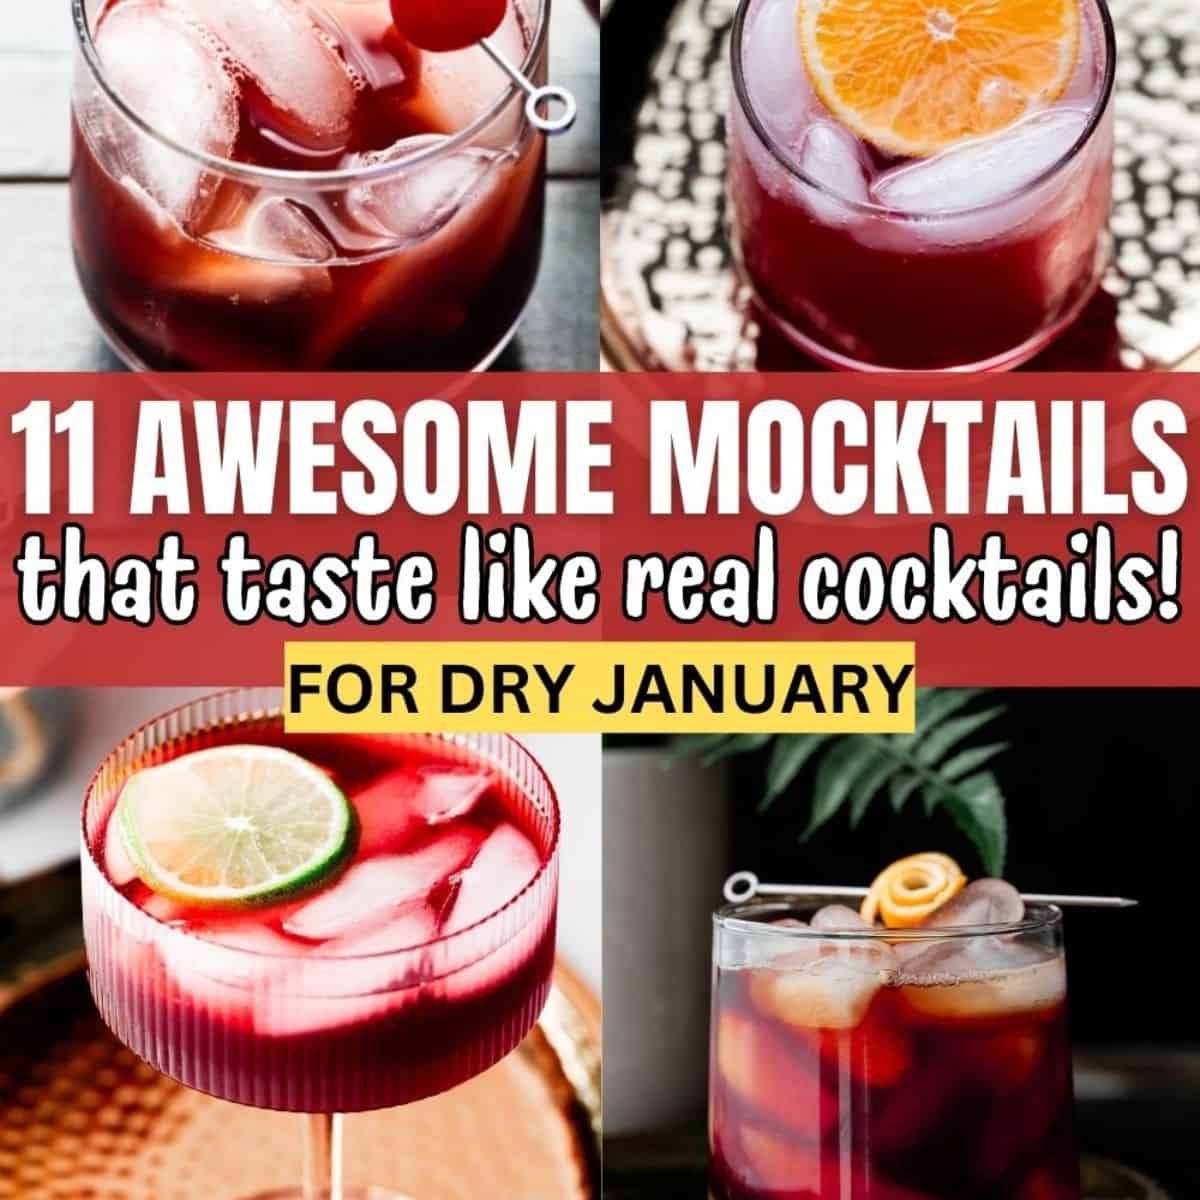 Mocktail hero image collage. 